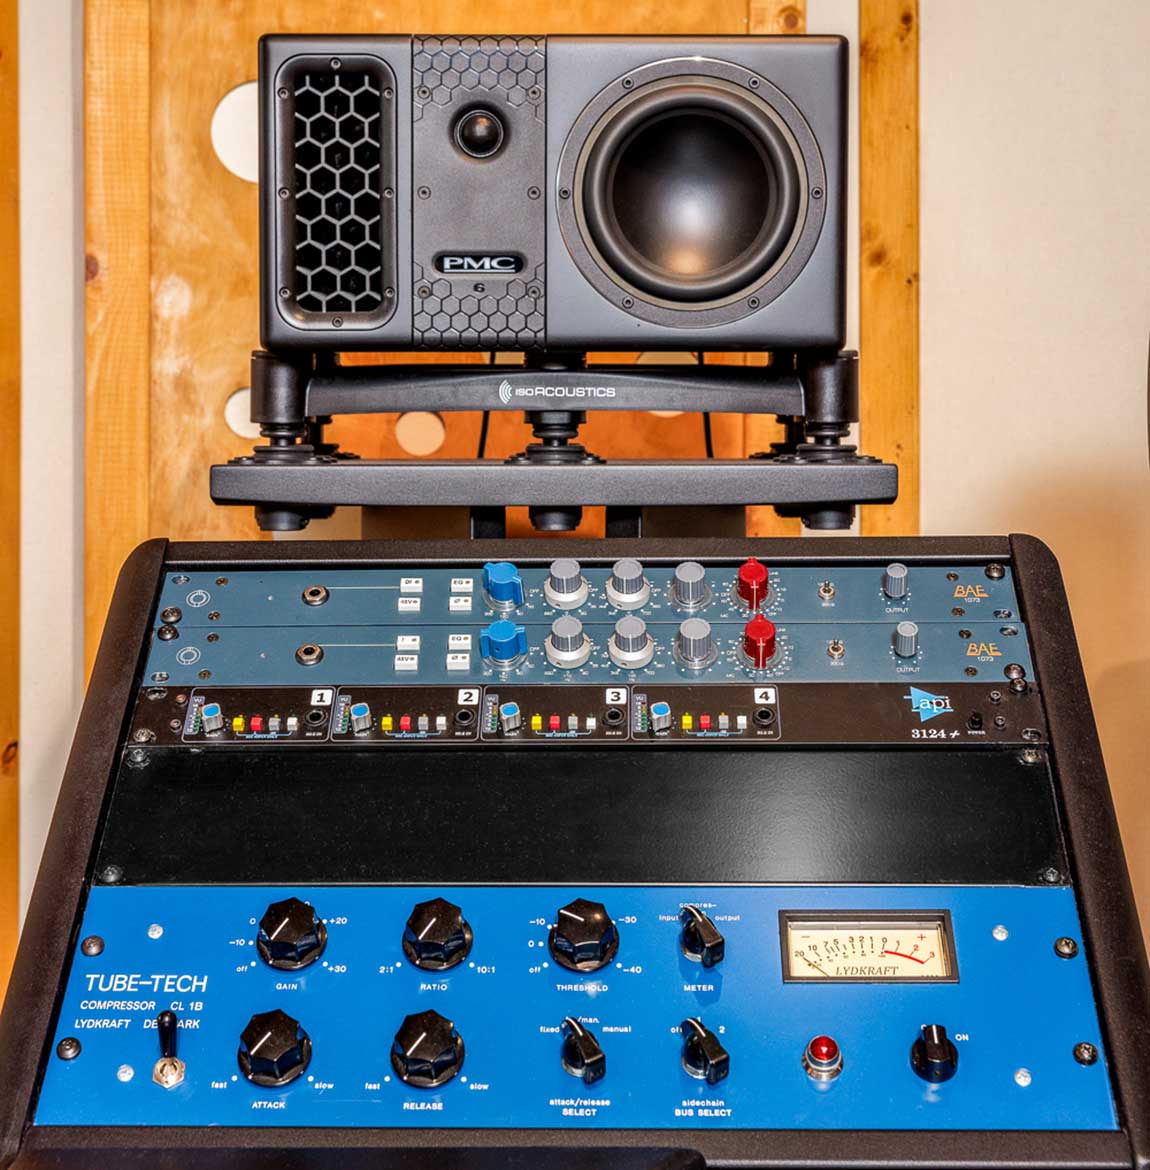 Casque Pro Studio 5 Audiophony – By dreamX